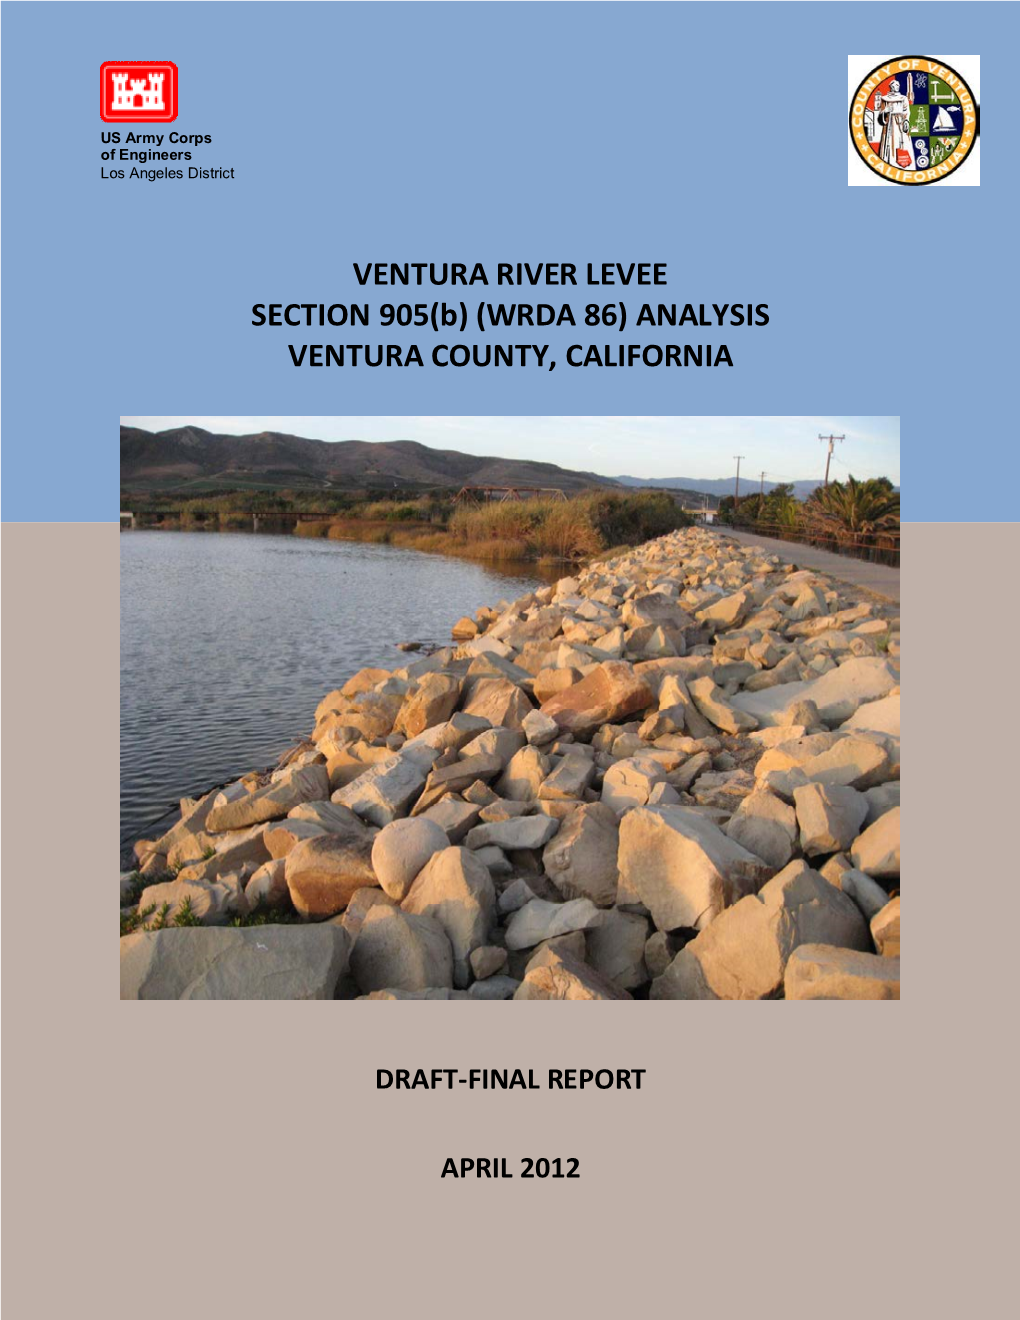 VENTURA RIVER LEVEE SECTION 905(B) (WRDA 86) ANALYSIS VENTURA COUNTY, CALIFORNIA